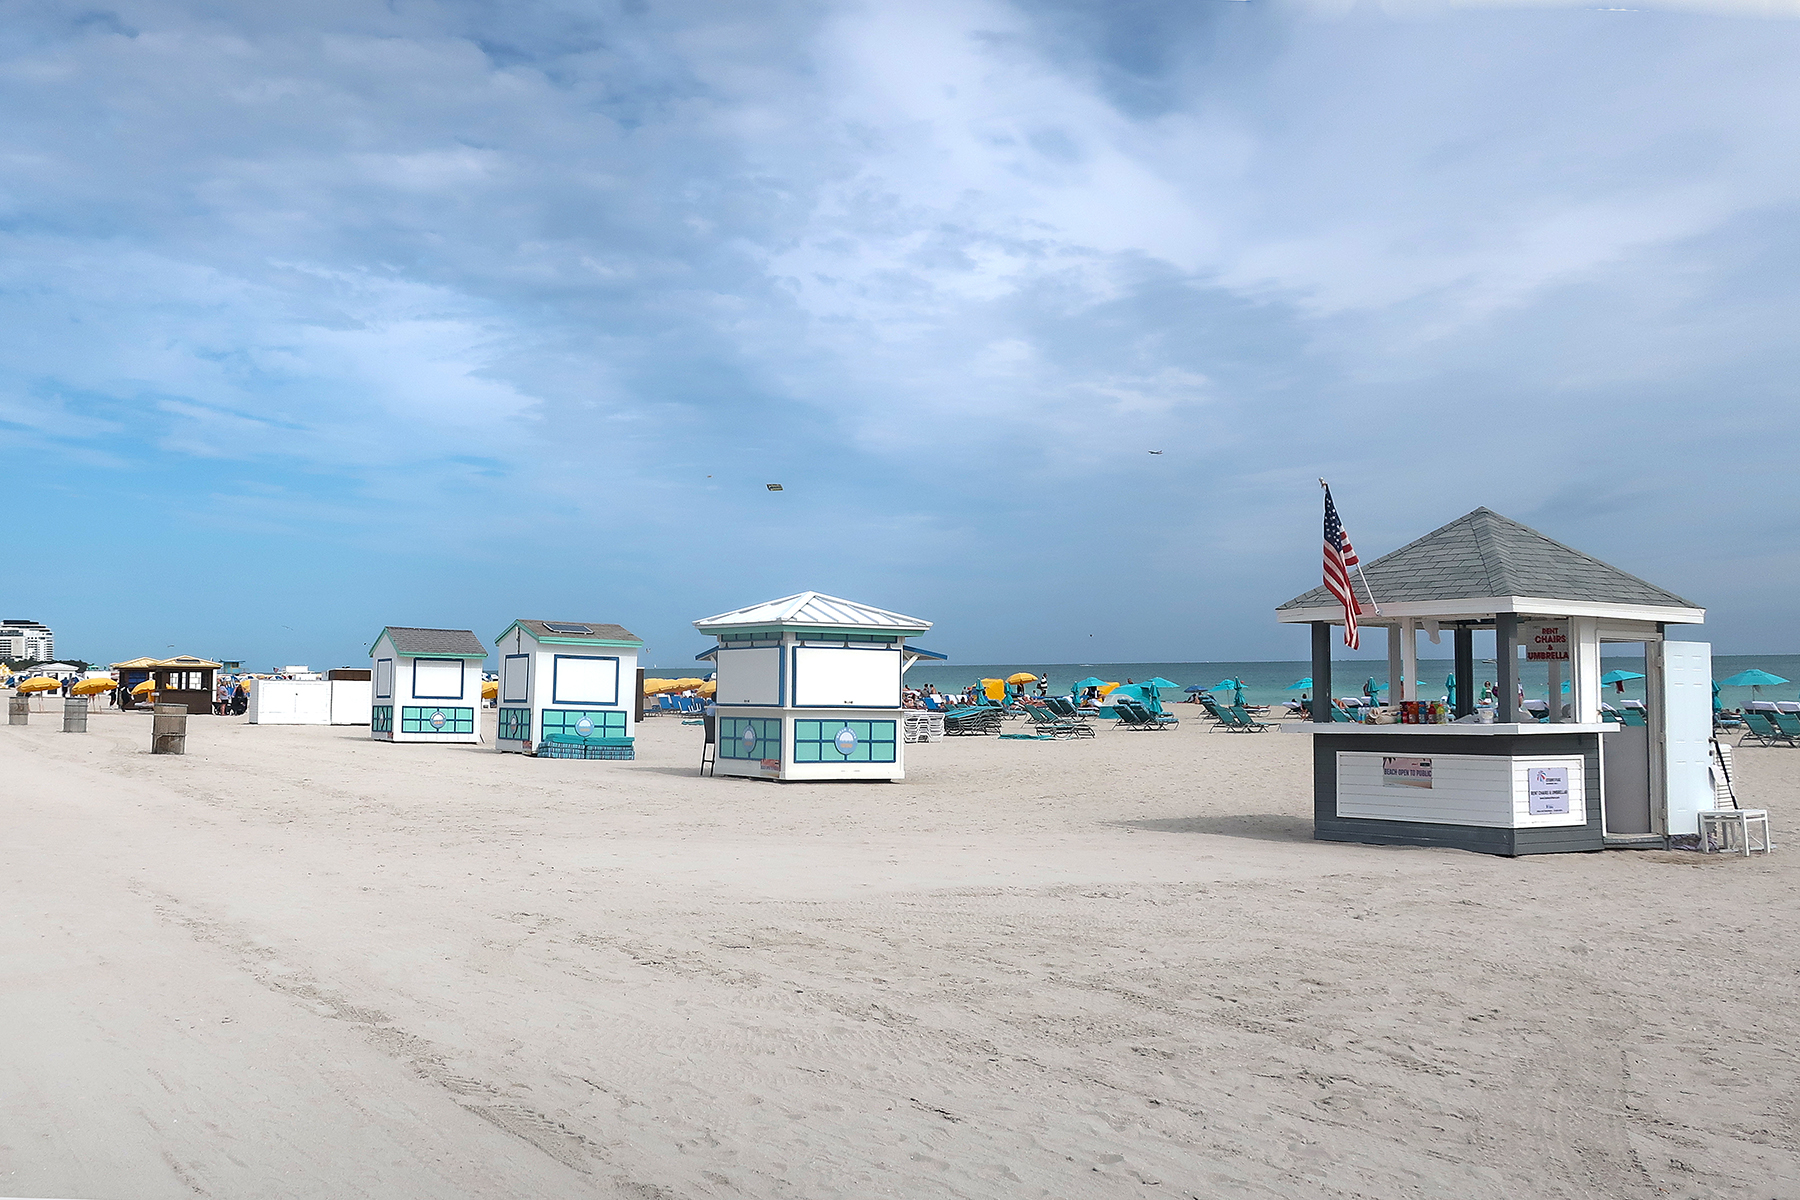 Sonne, Strand, South Beach: 13 Insidertipps für Miami Beach